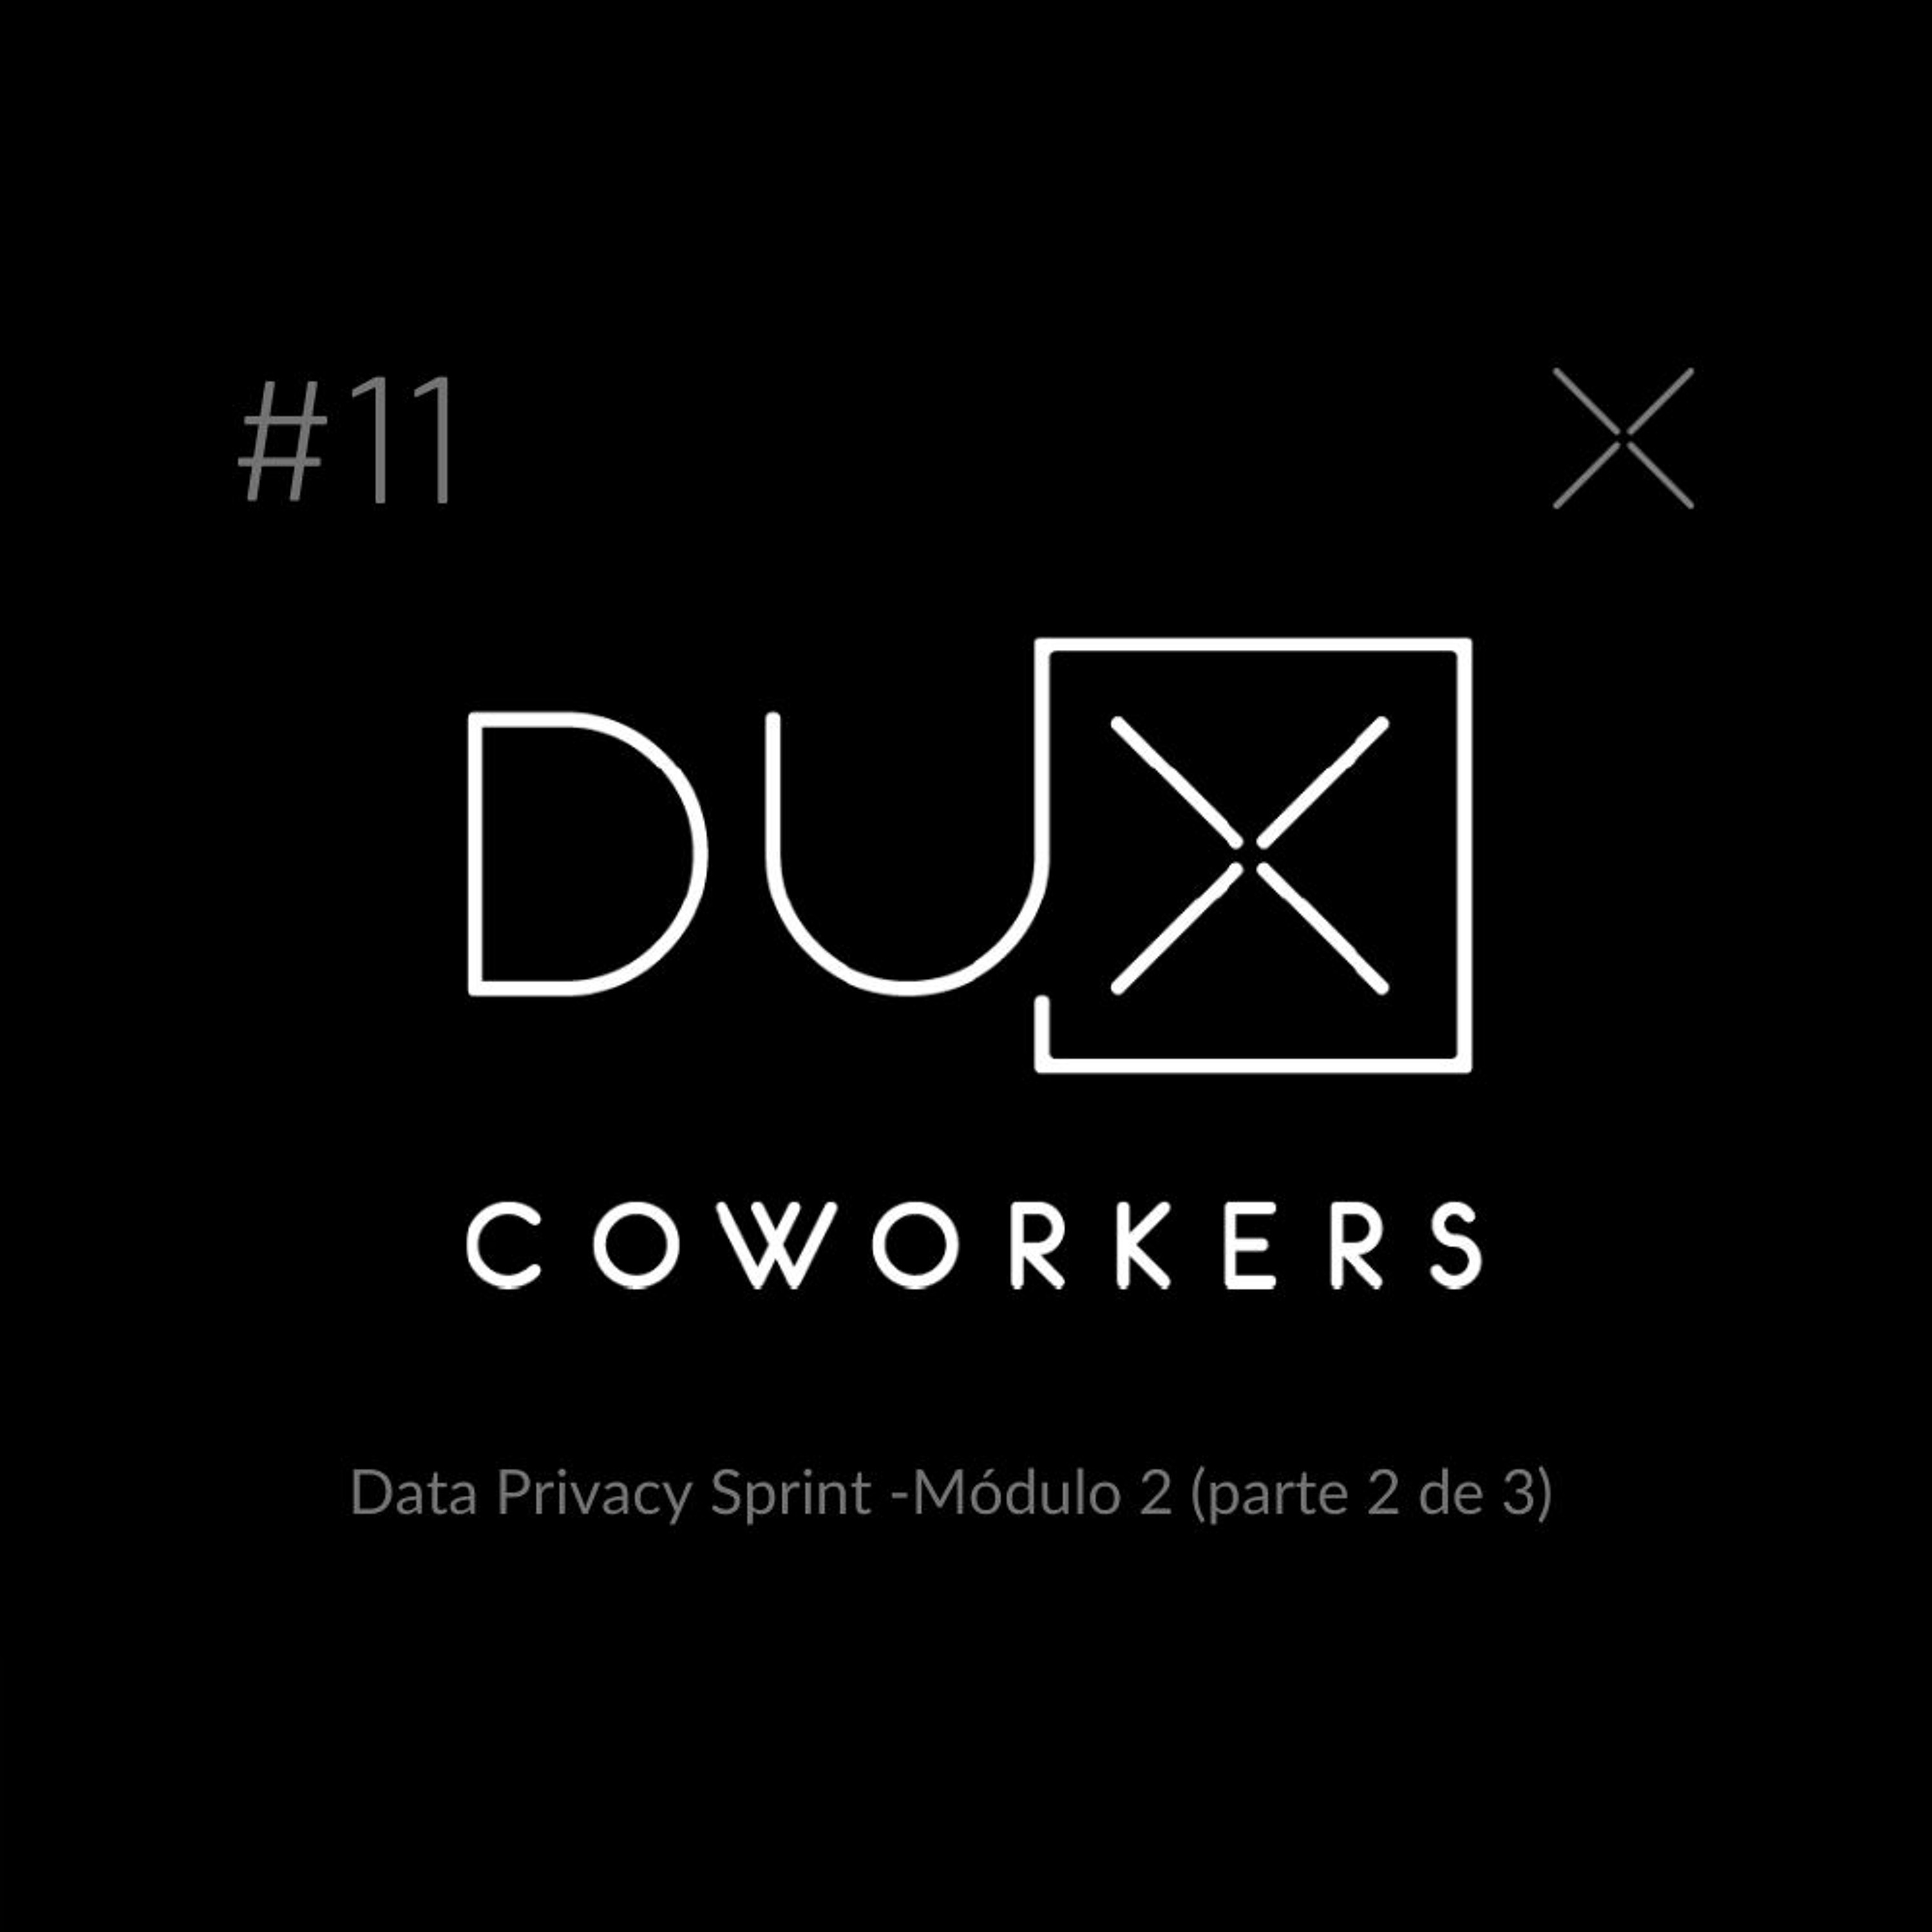 023- #DUX11 - Data Privacy Sprint Modulo 2 (2)